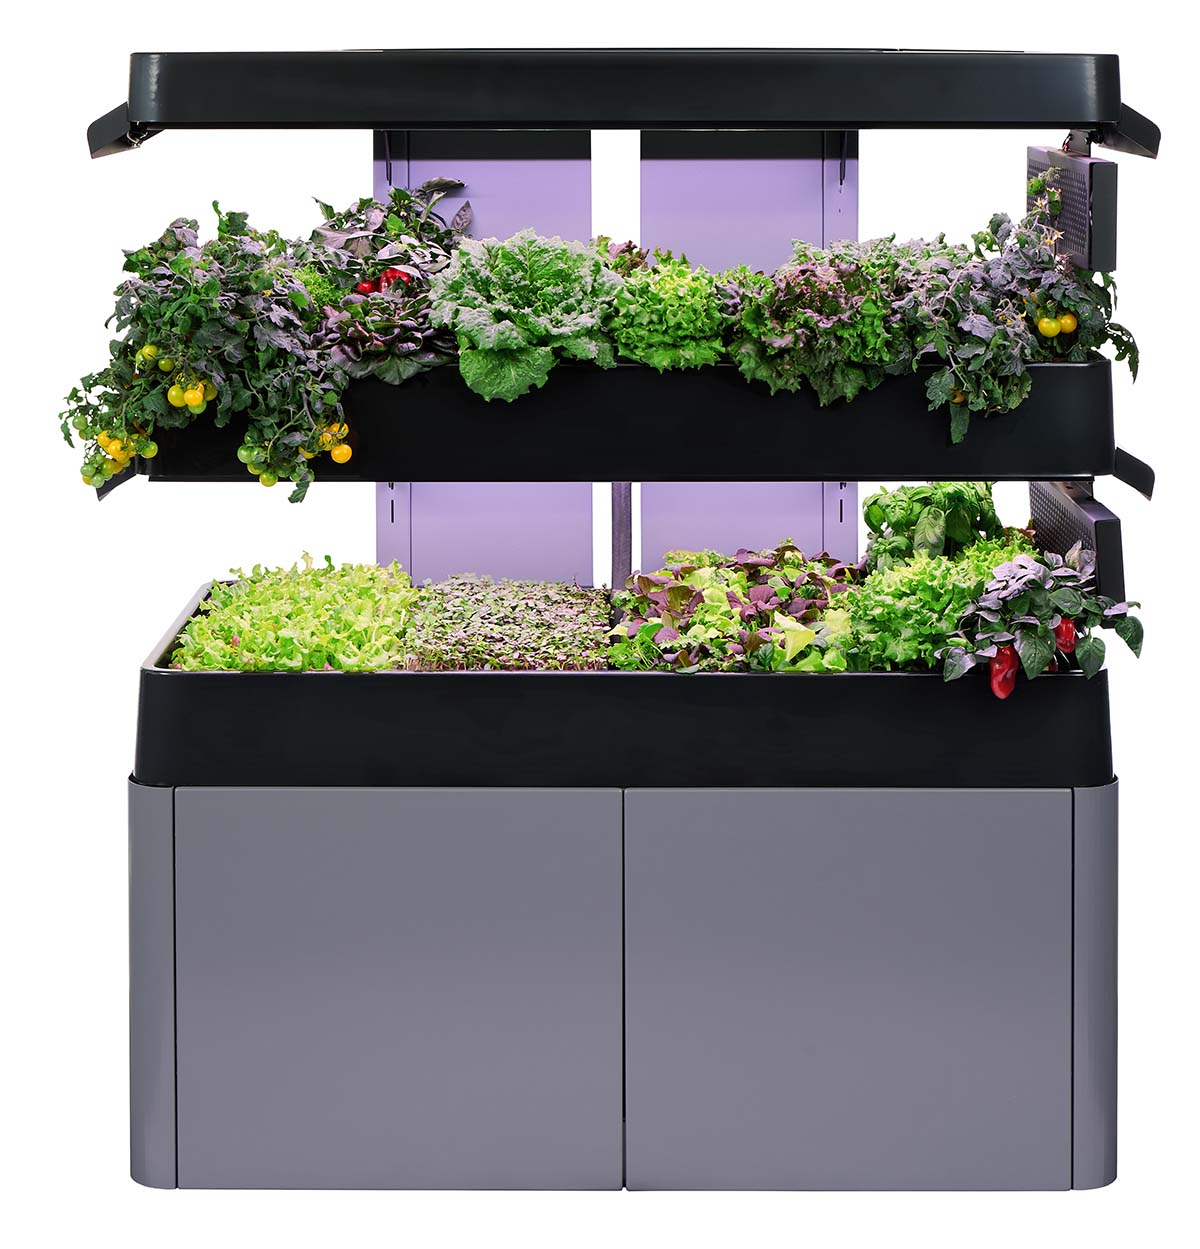 Two tiered indoor garden system